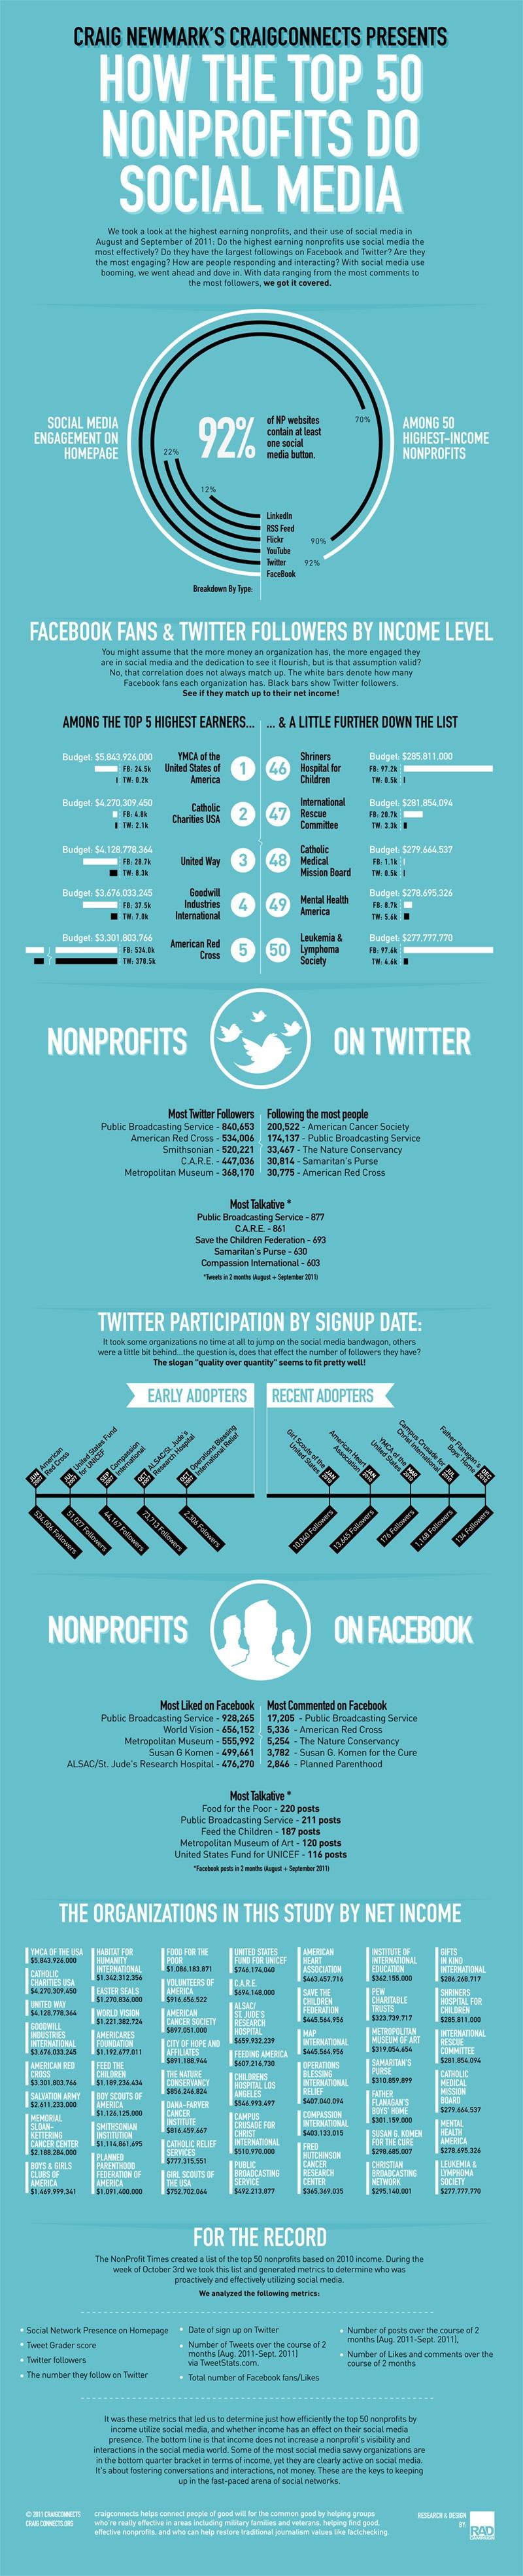 npo infographic El top 50 de las ONG en Social Media